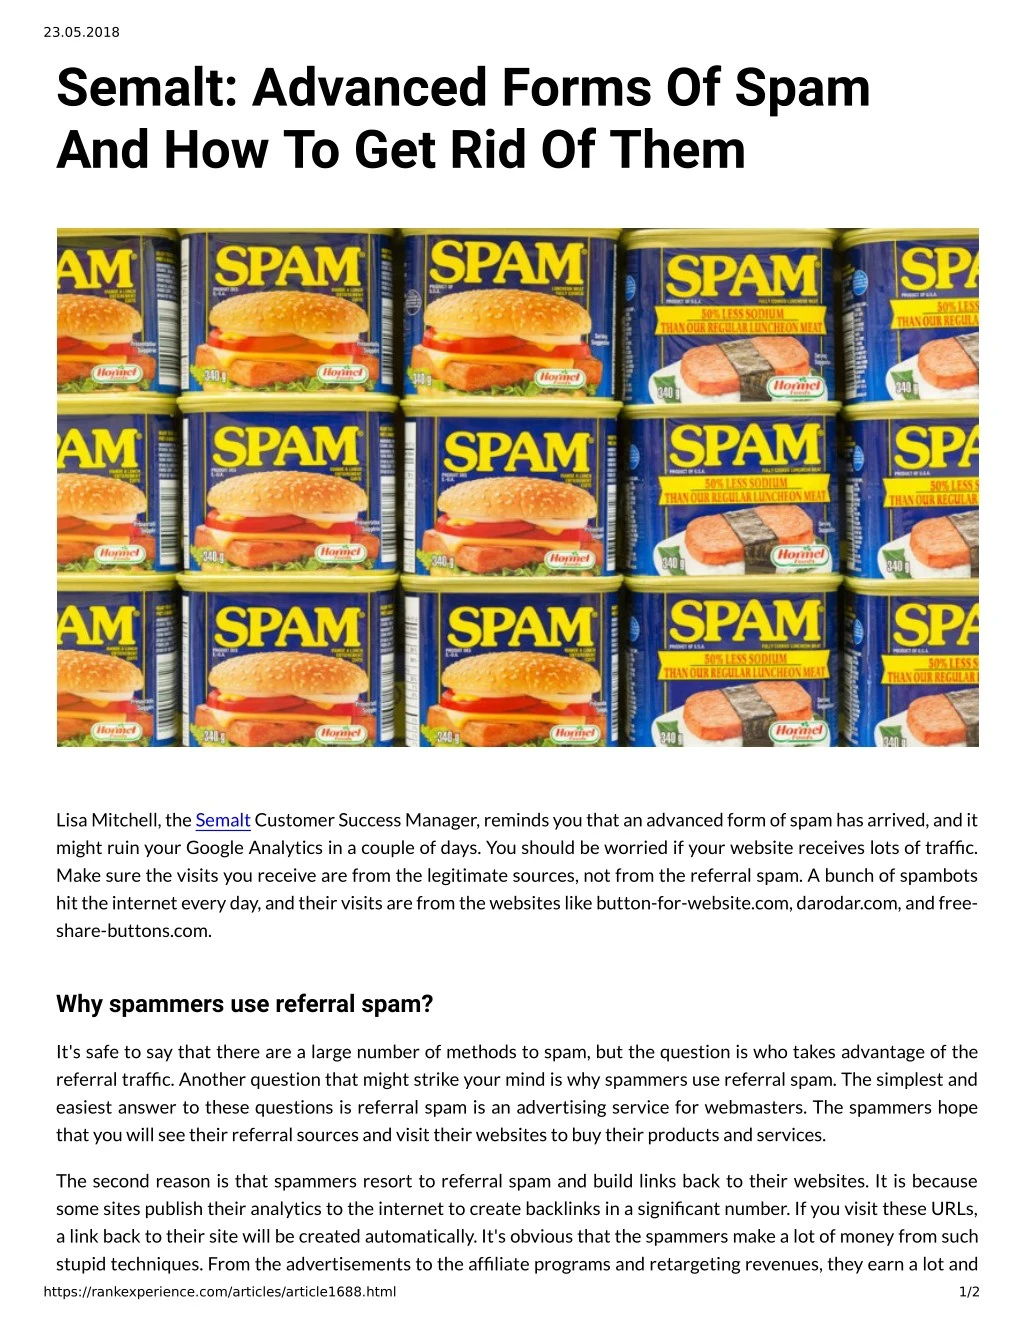 23 05 2018 semalt advanced forms of spam